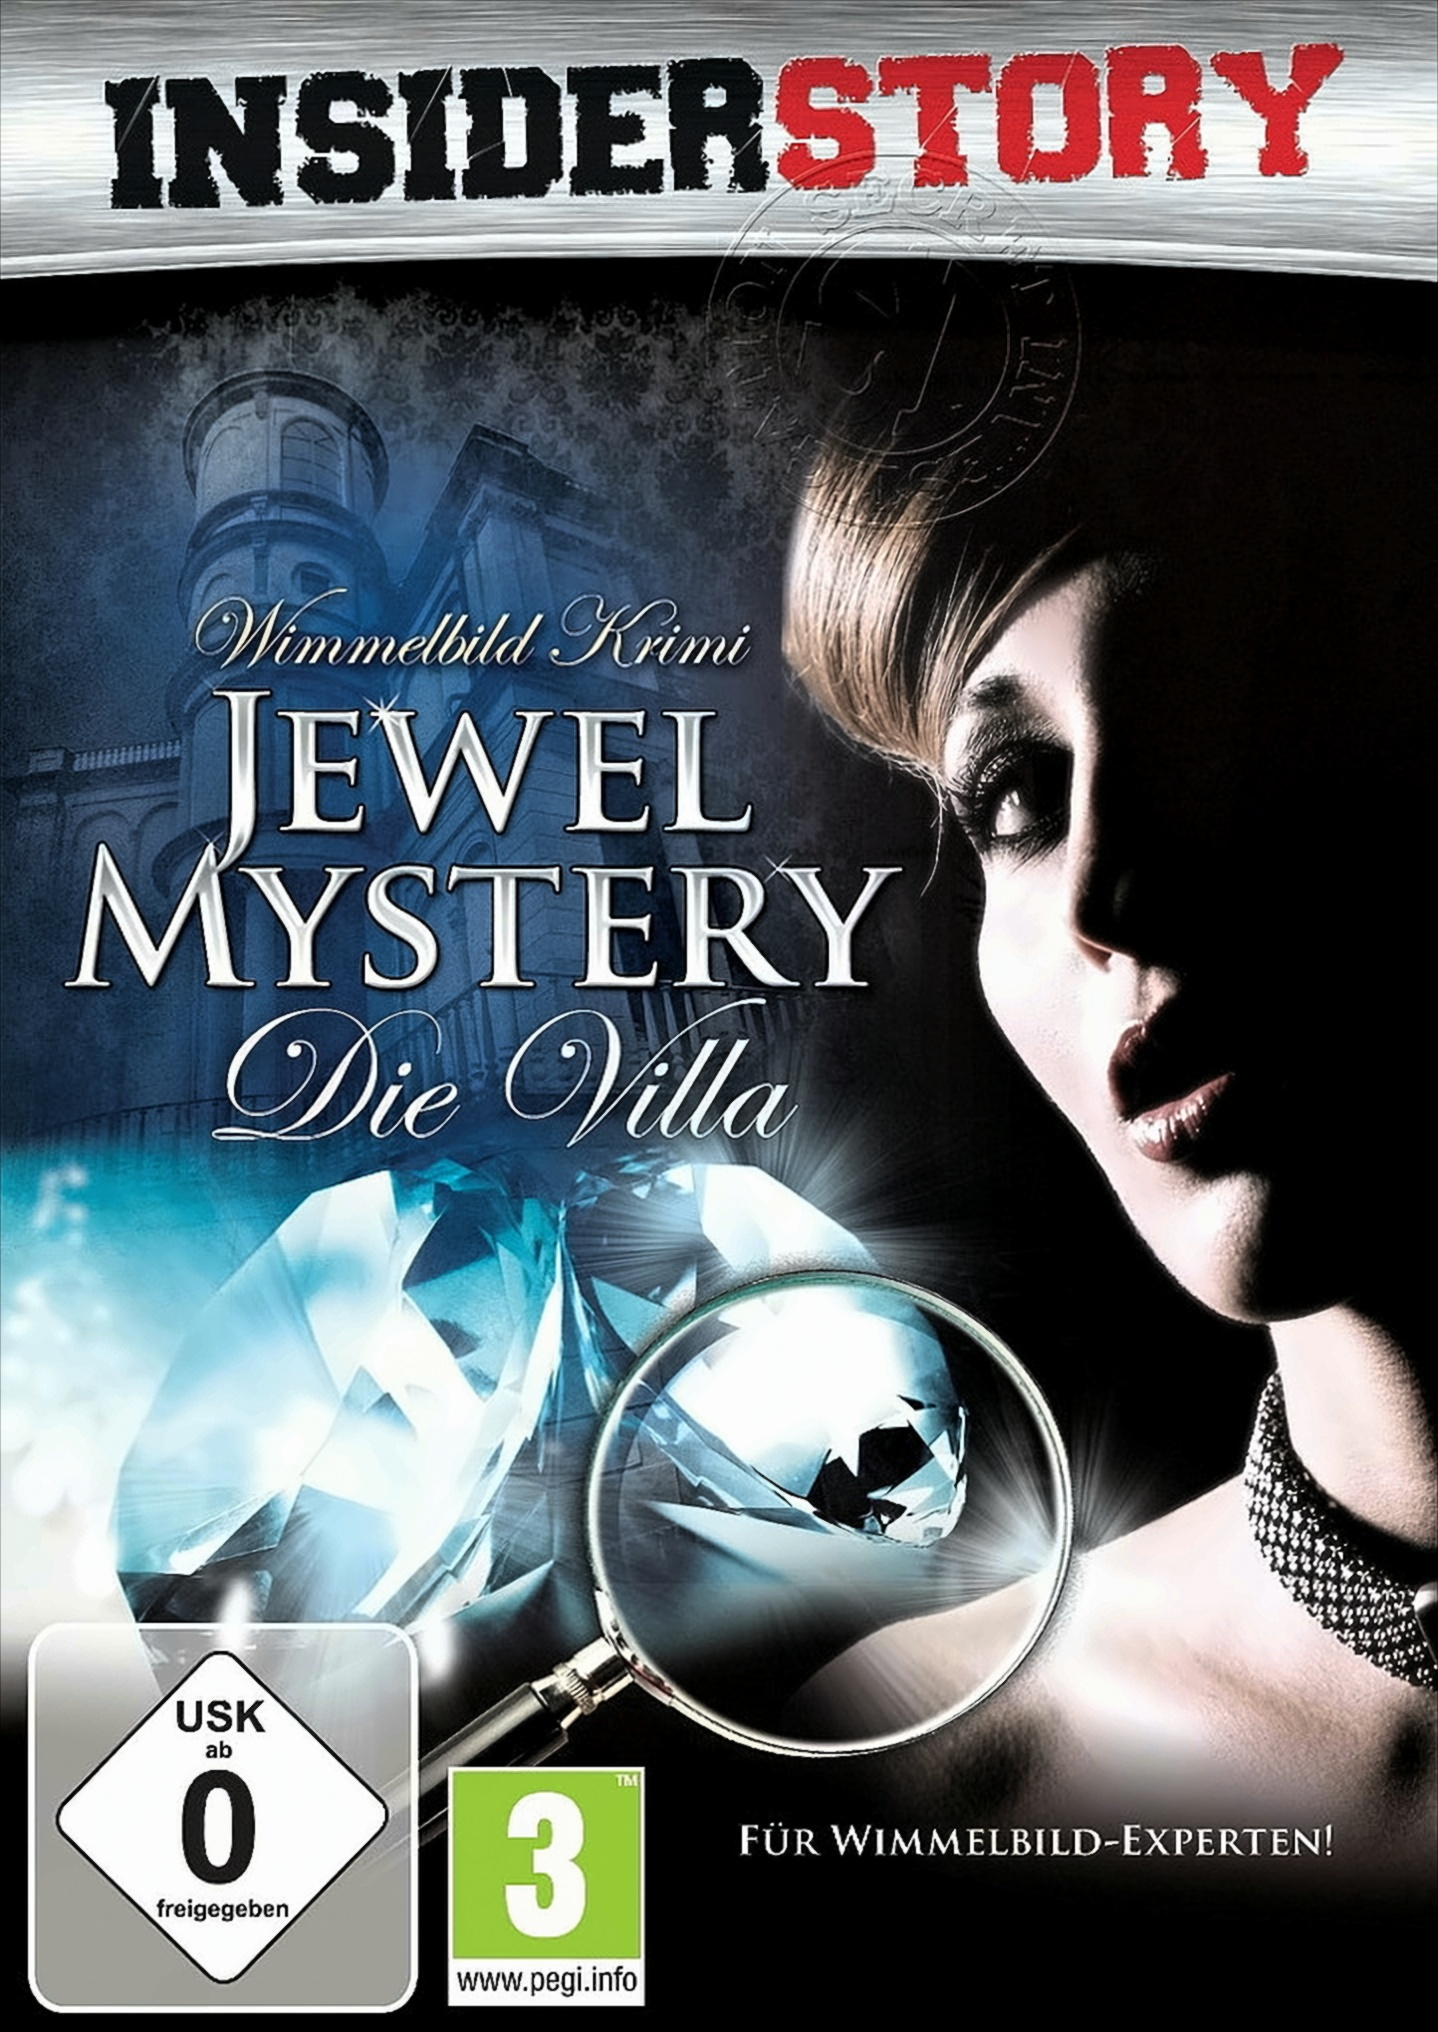 Insider Story: Jewel Mystery Die - Villa - [PC